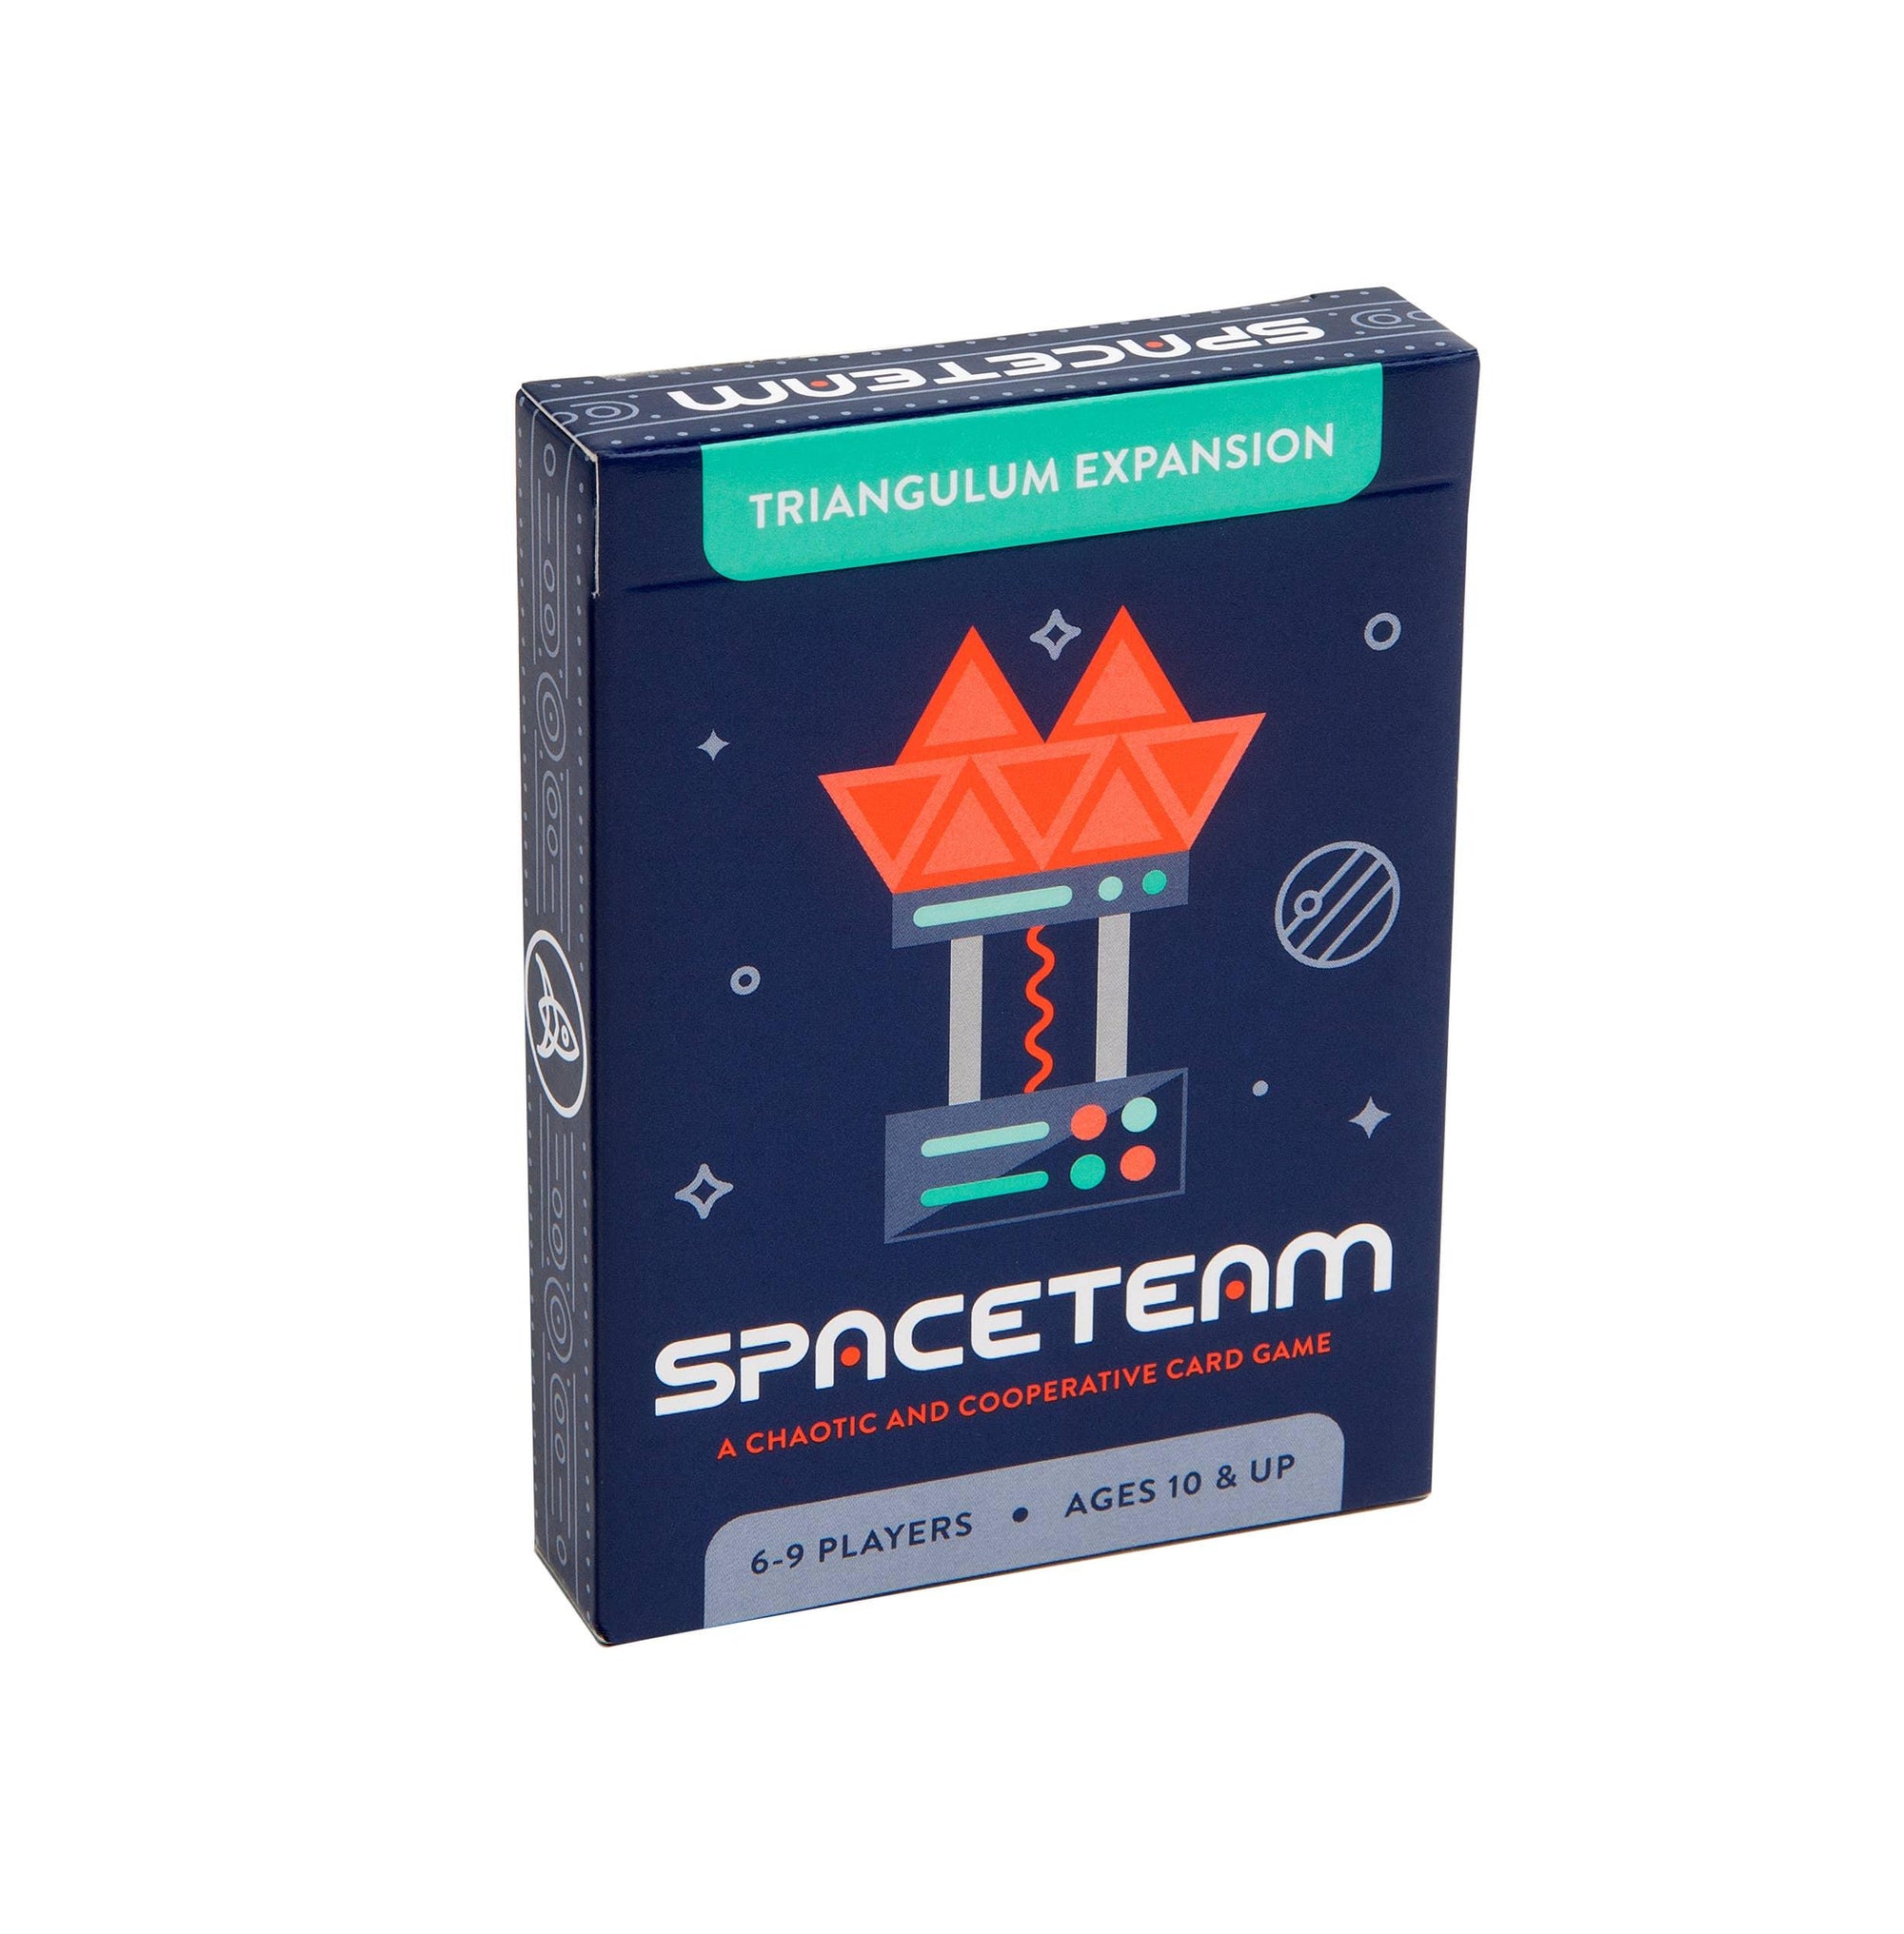 Spaceteam Expansion: Triangulum - Oddball Games